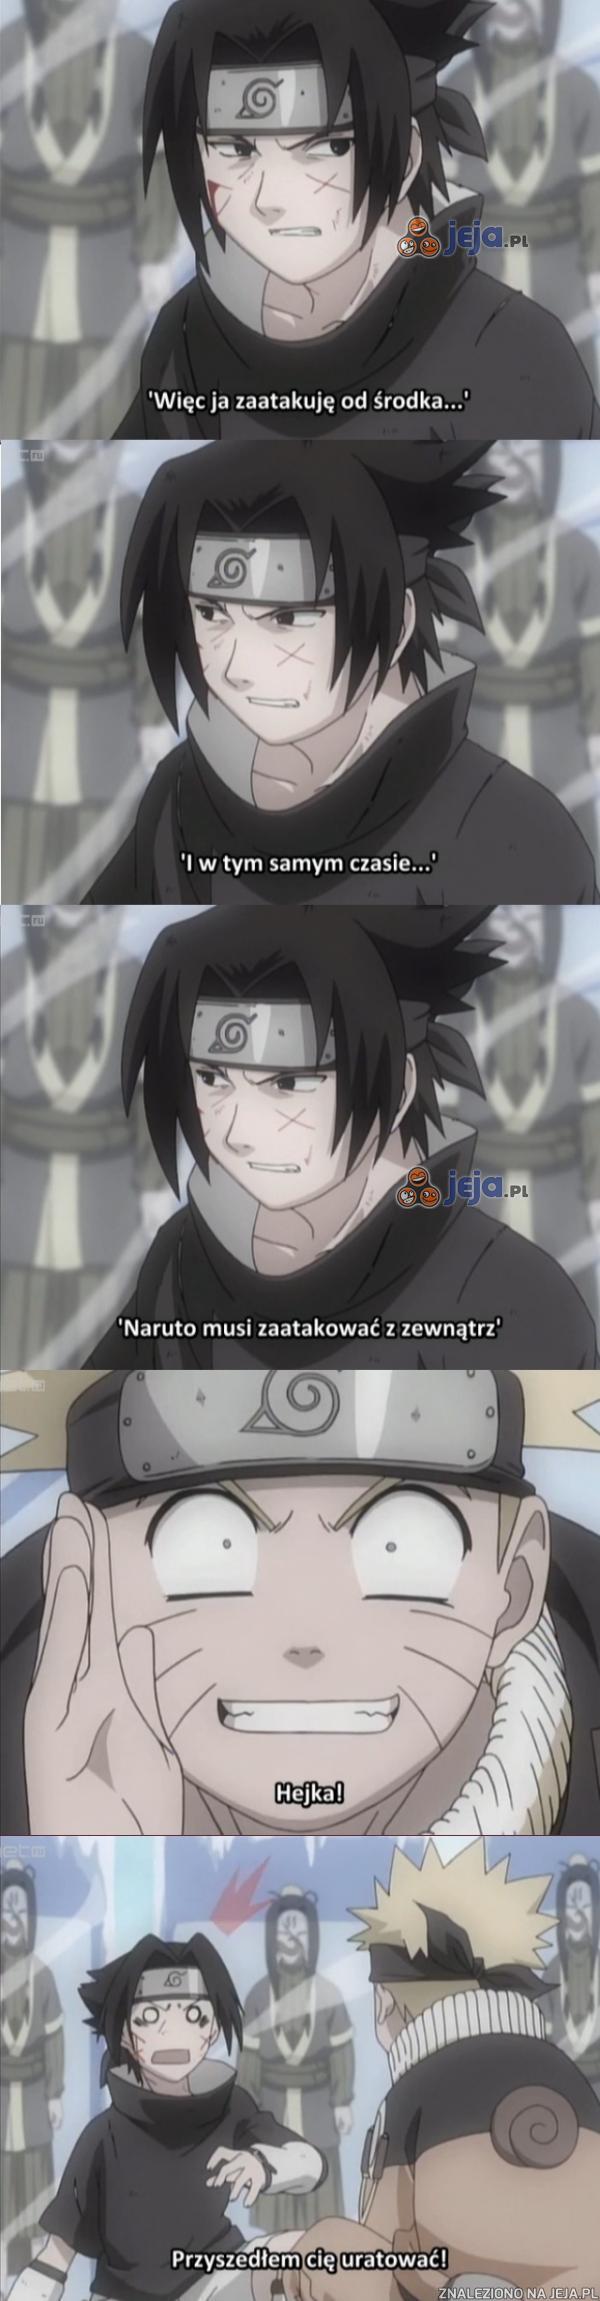 Naruto nigdy nie był bystry